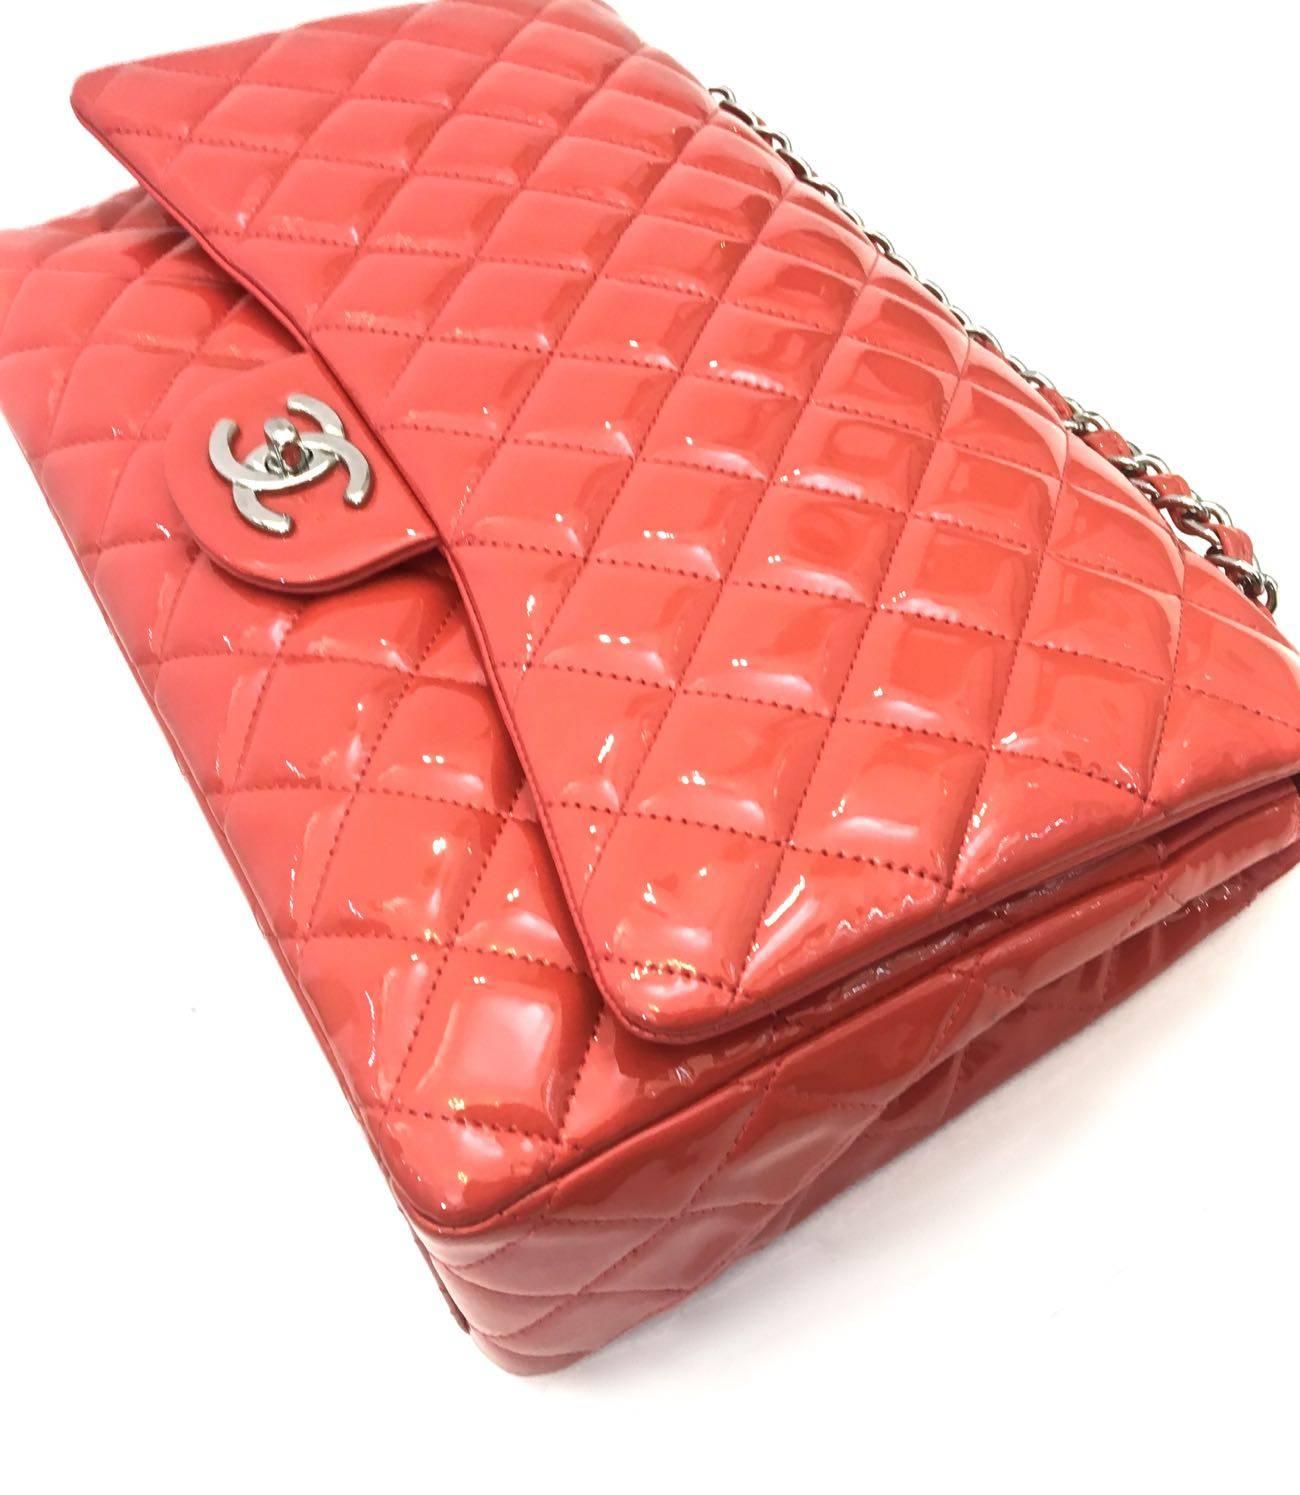 Orange Chanel Bag Maxi Jumbo Coral Vernis Leather, 2012